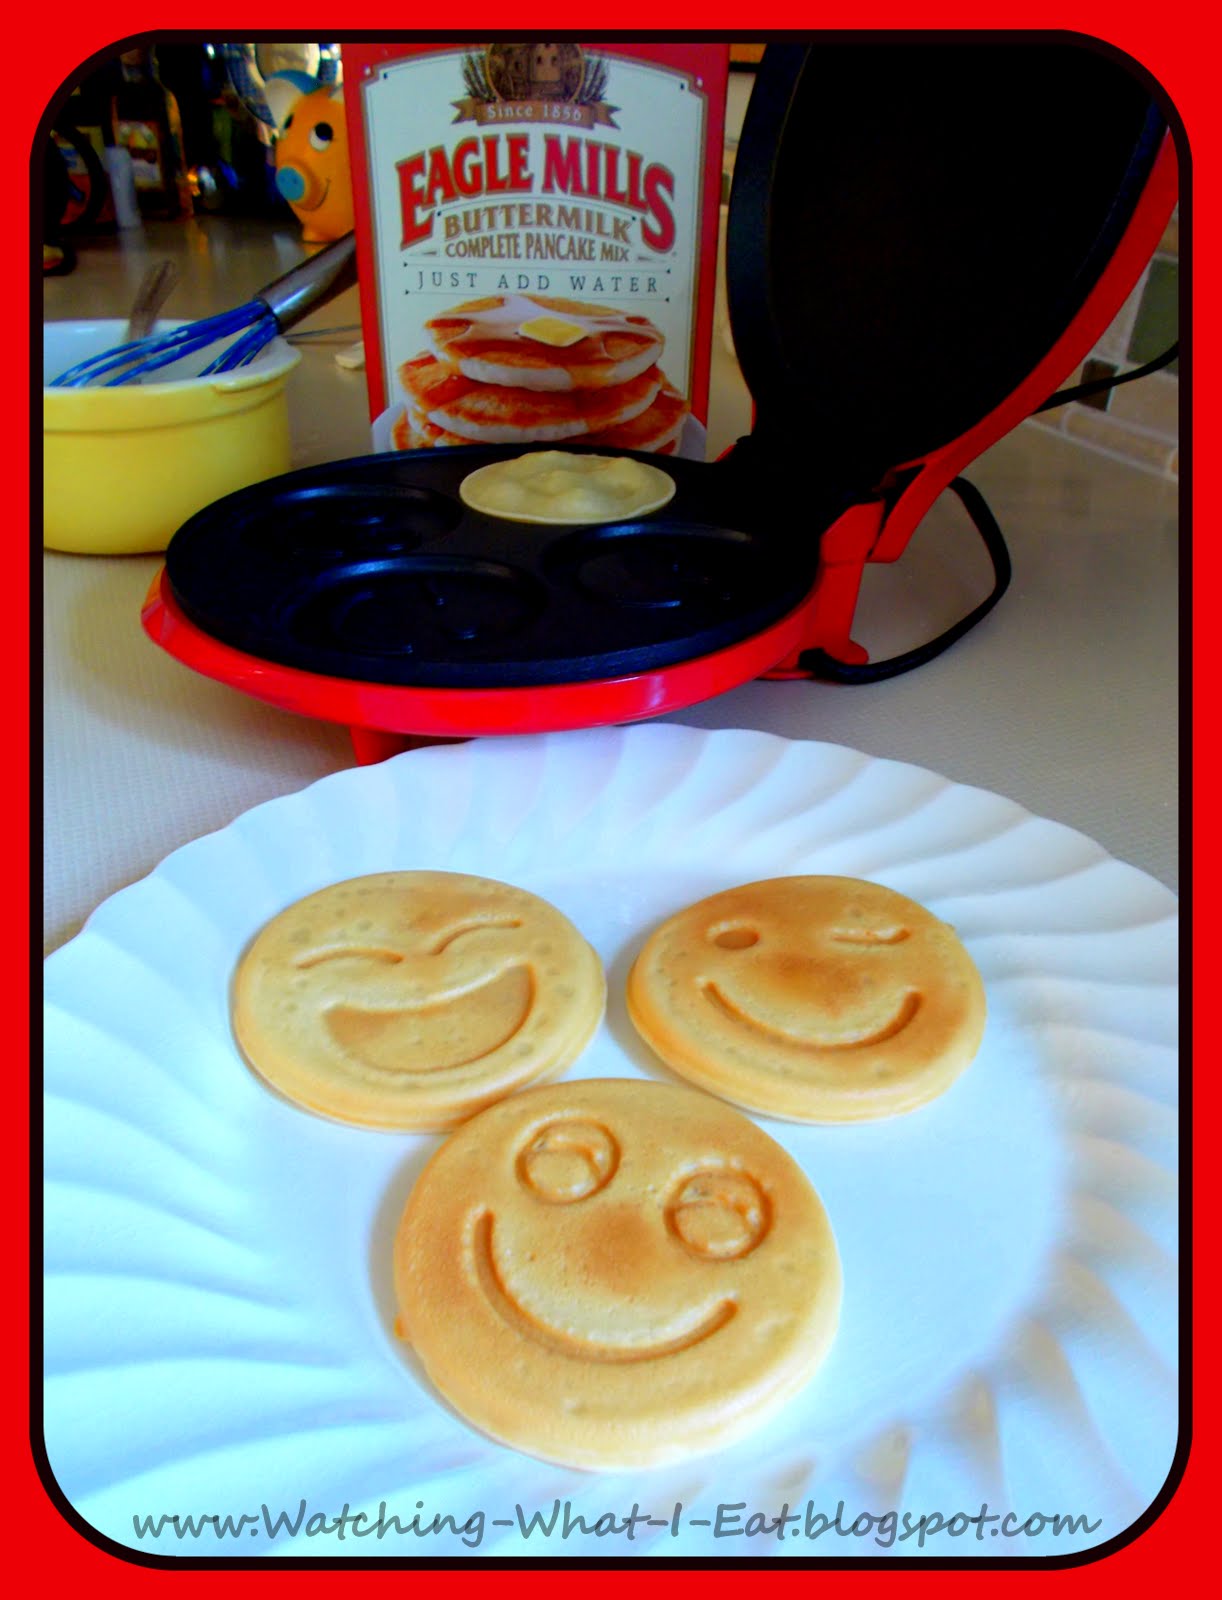 http://1.bp.blogspot.com/-R6QkUYlDHe4/UGBeMP1T5PI/AAAAAAAAEs4/-_8-itwTZKM/s1600/smiley+face+mini+pancakes.JPG